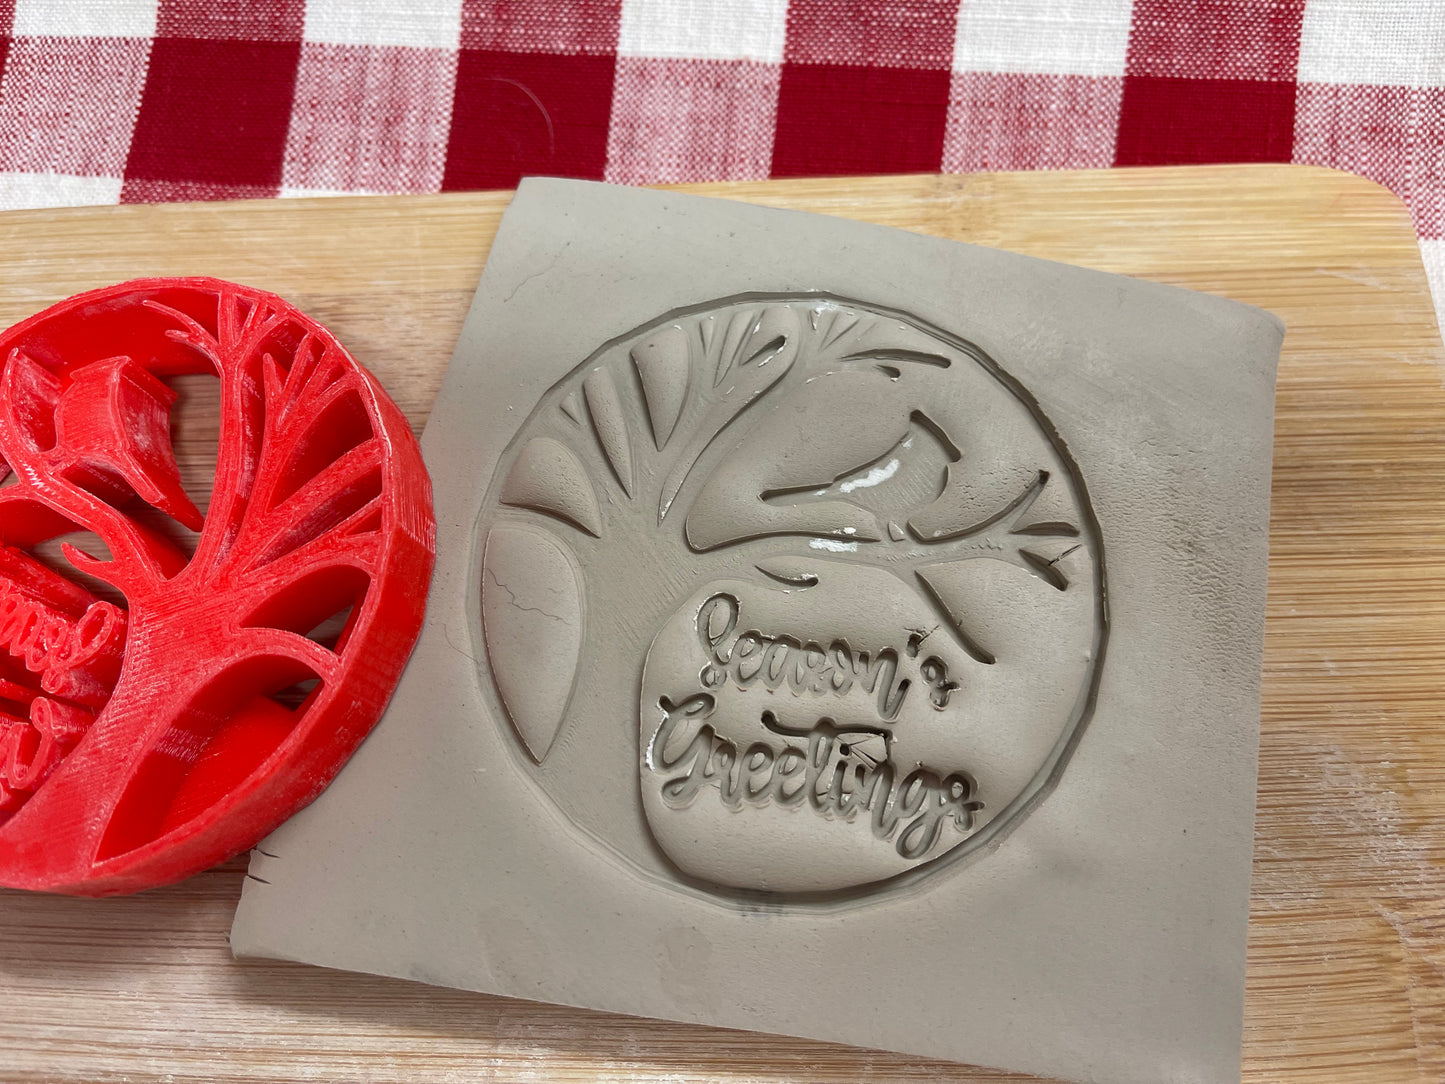 Cardinal / Season's Greetings scene pottery stamp - plastic 3D printed, multiple sizes